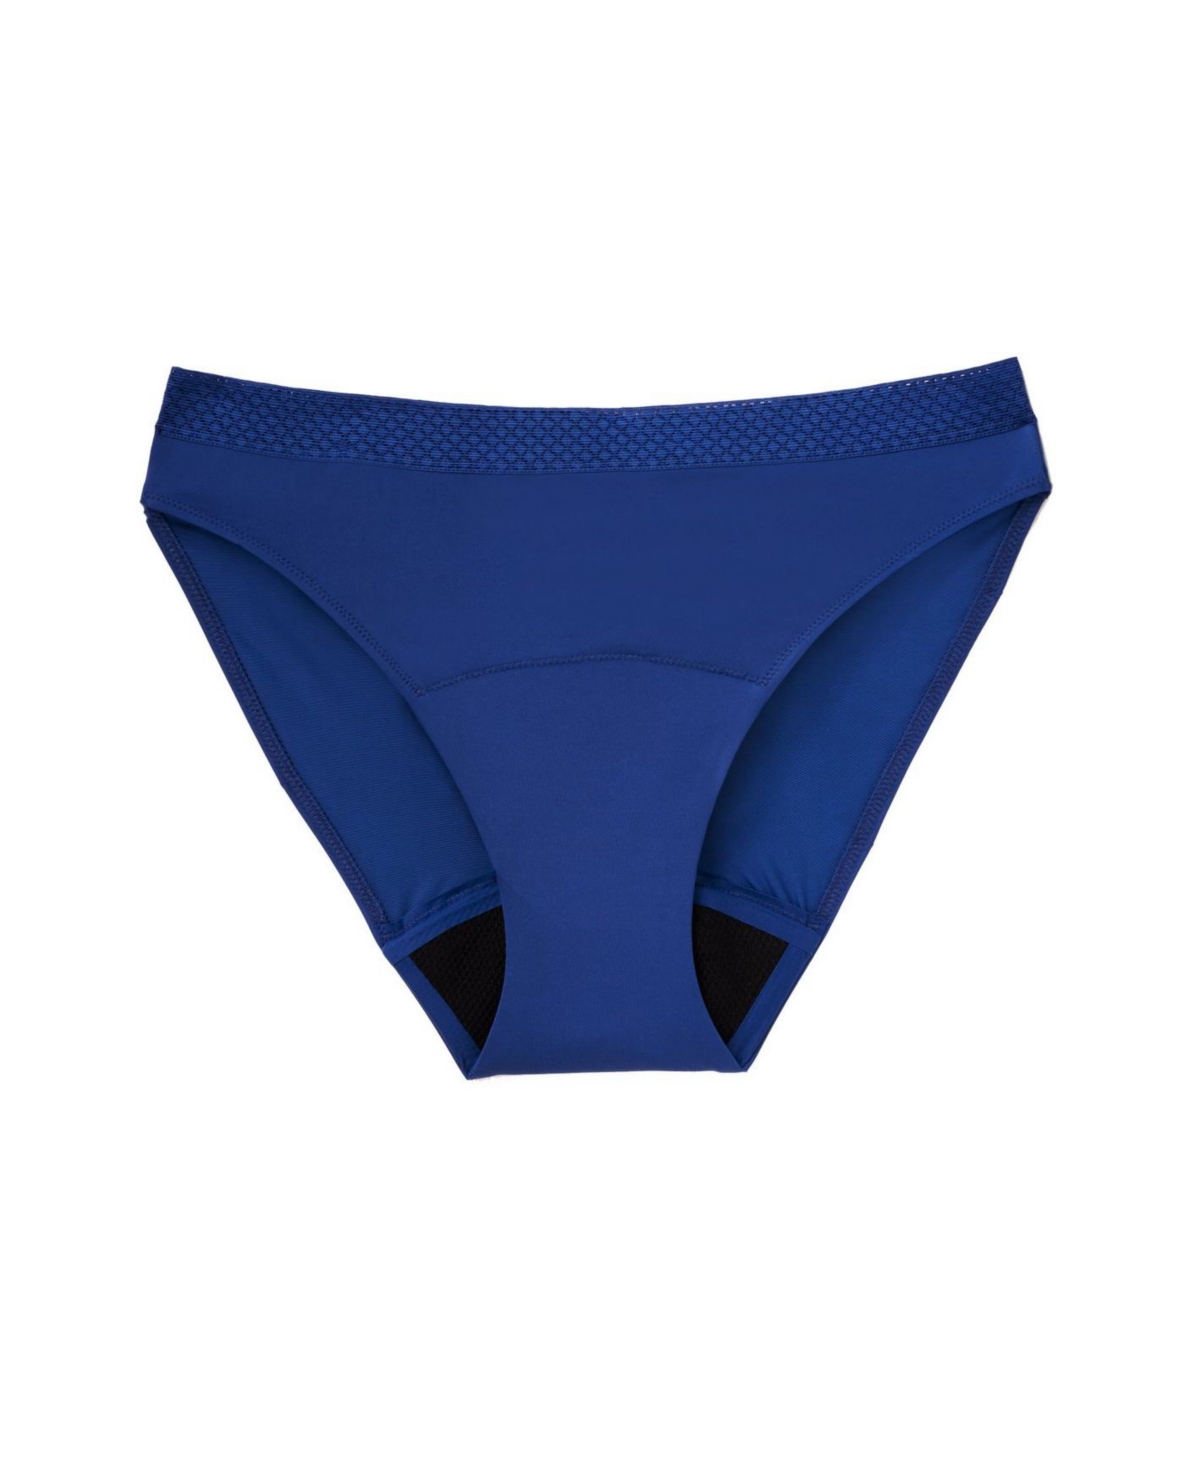 Katelin Women's Plus-Size Bikini Period-Proof Panty - Dark blue